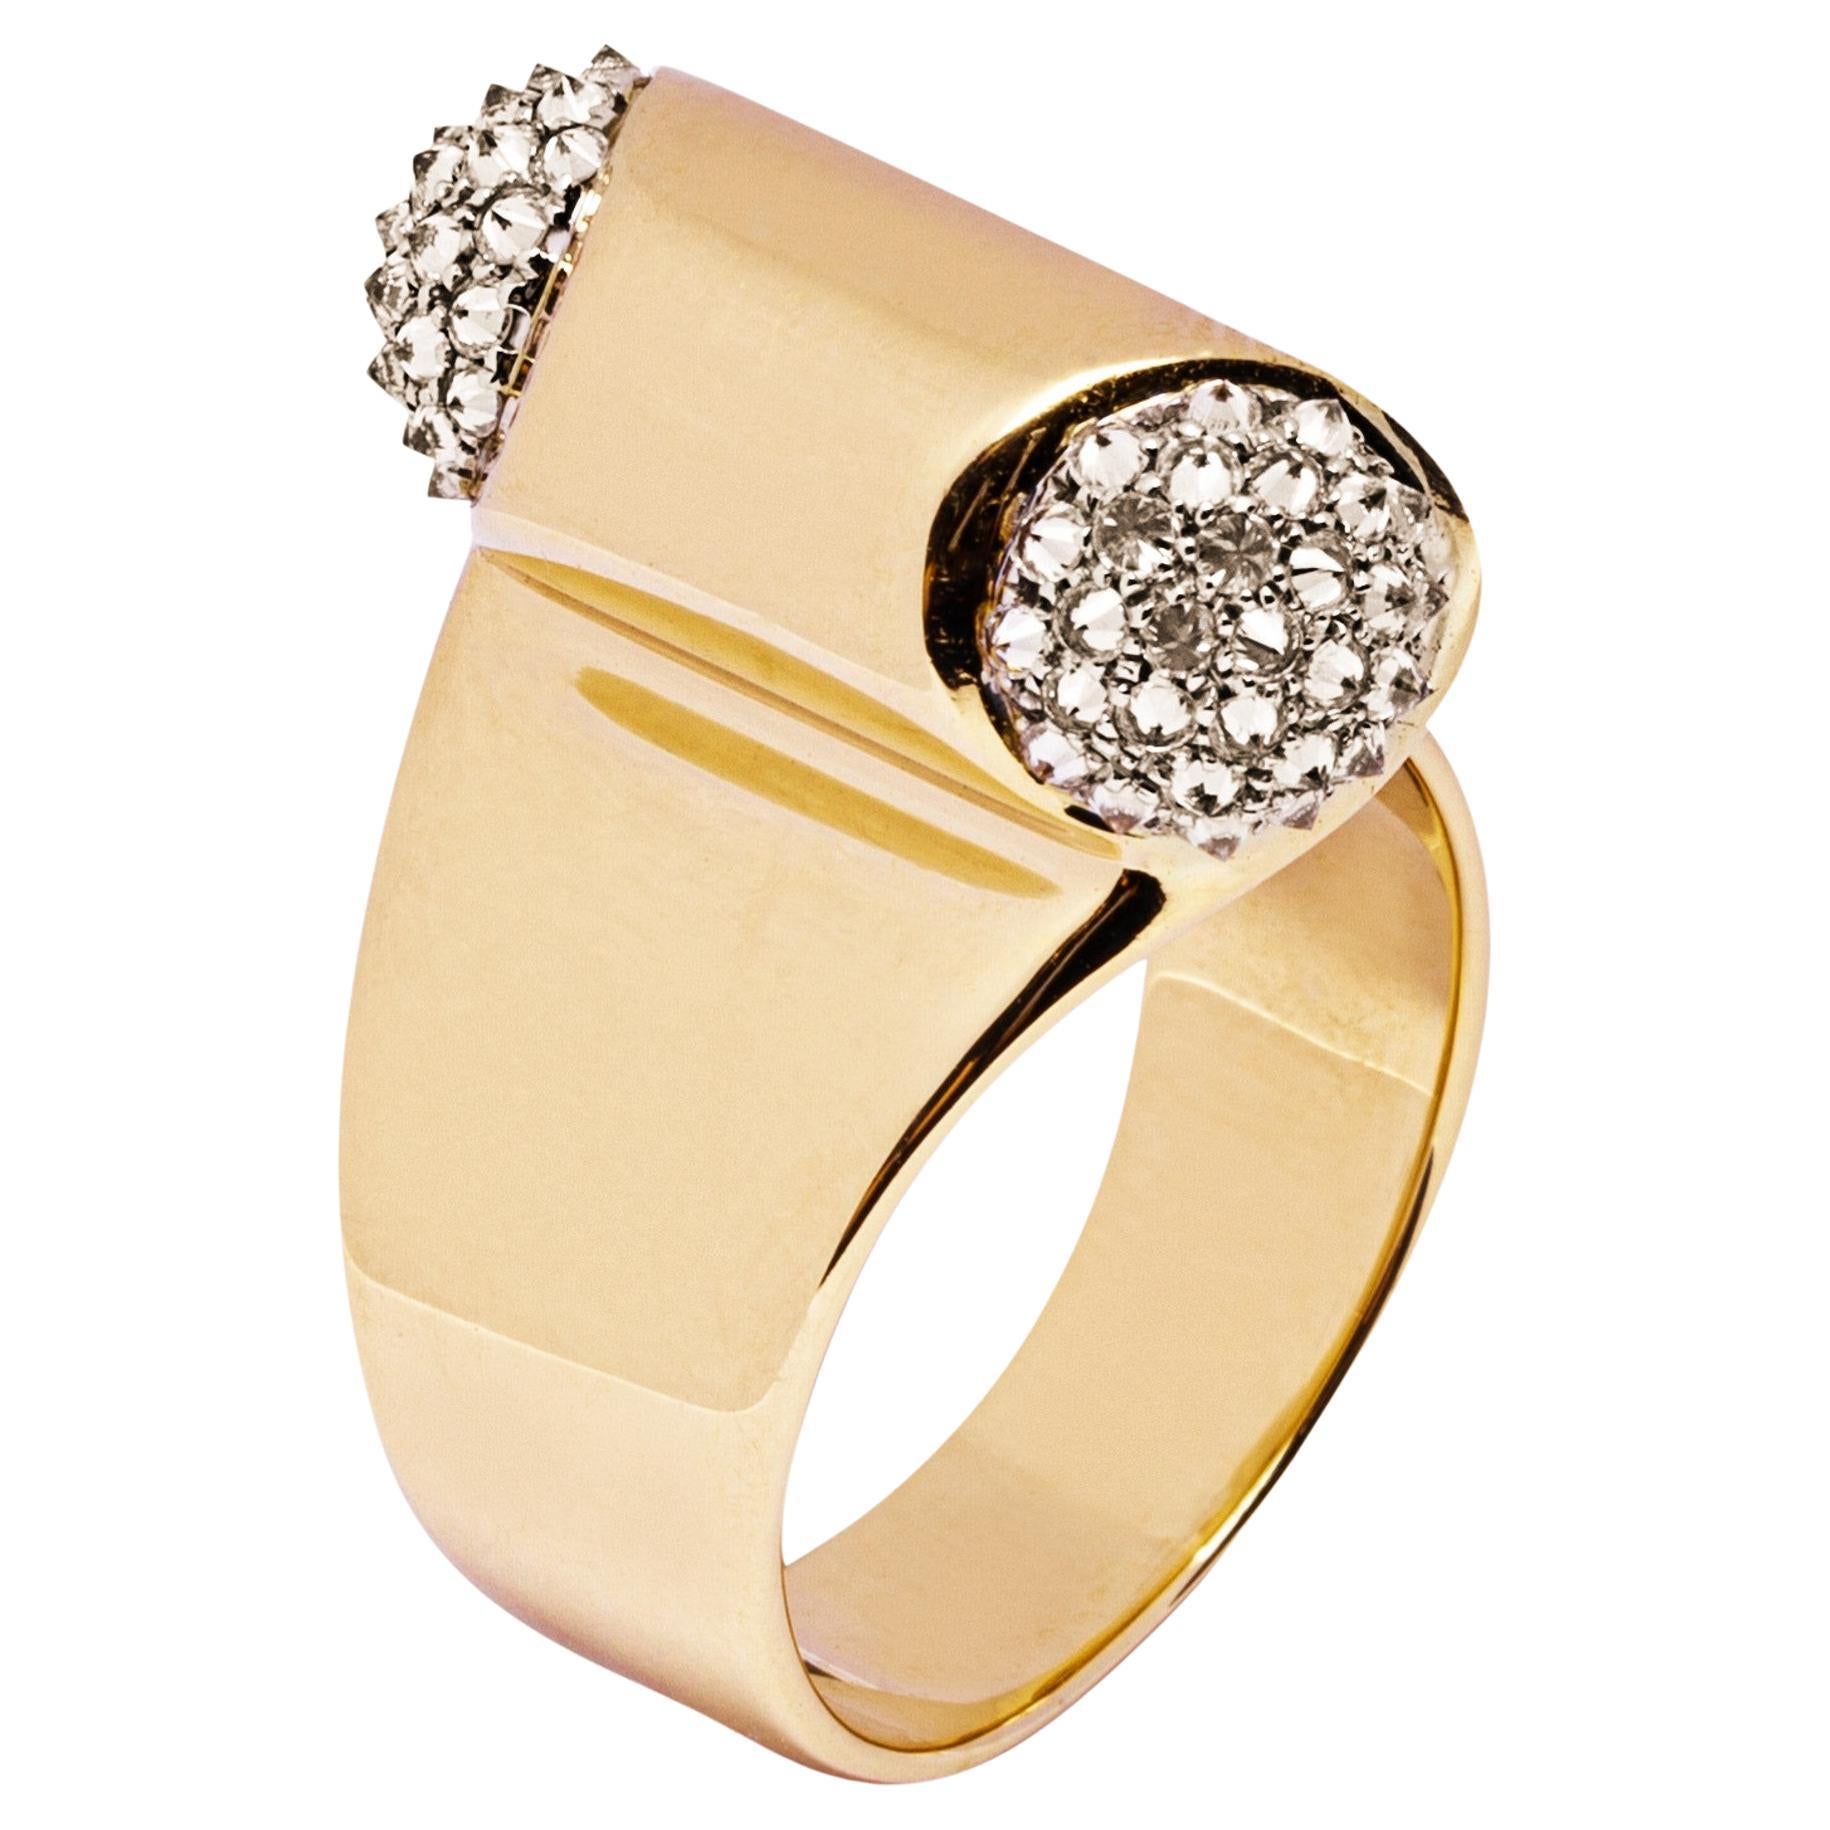 Alex Jona White Diamond 18 Karat Yellow Gold Band Ring For Sale